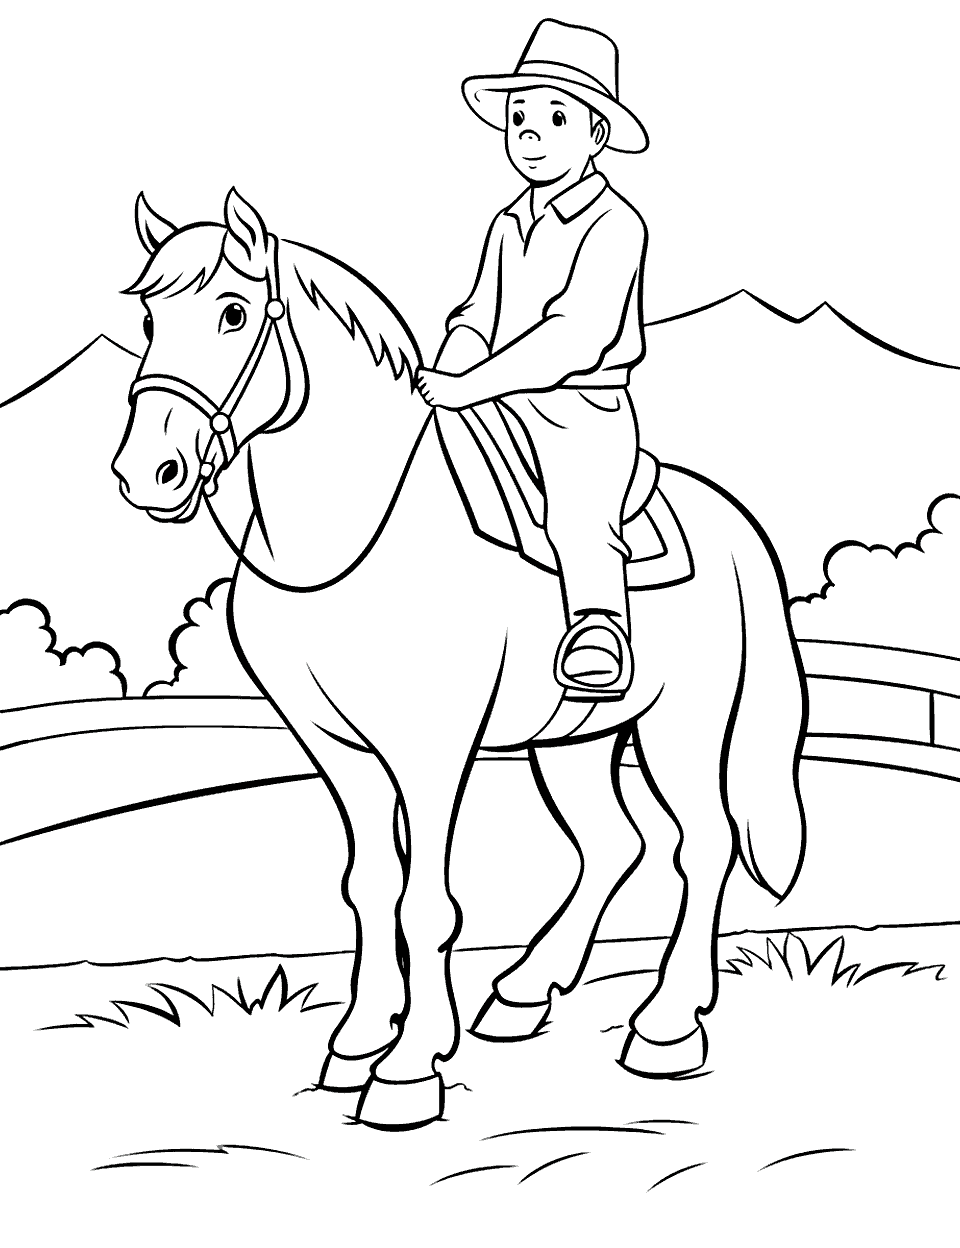 Farmer on a Horse Farm Coloring Page - A farmer riding a horse across the field.